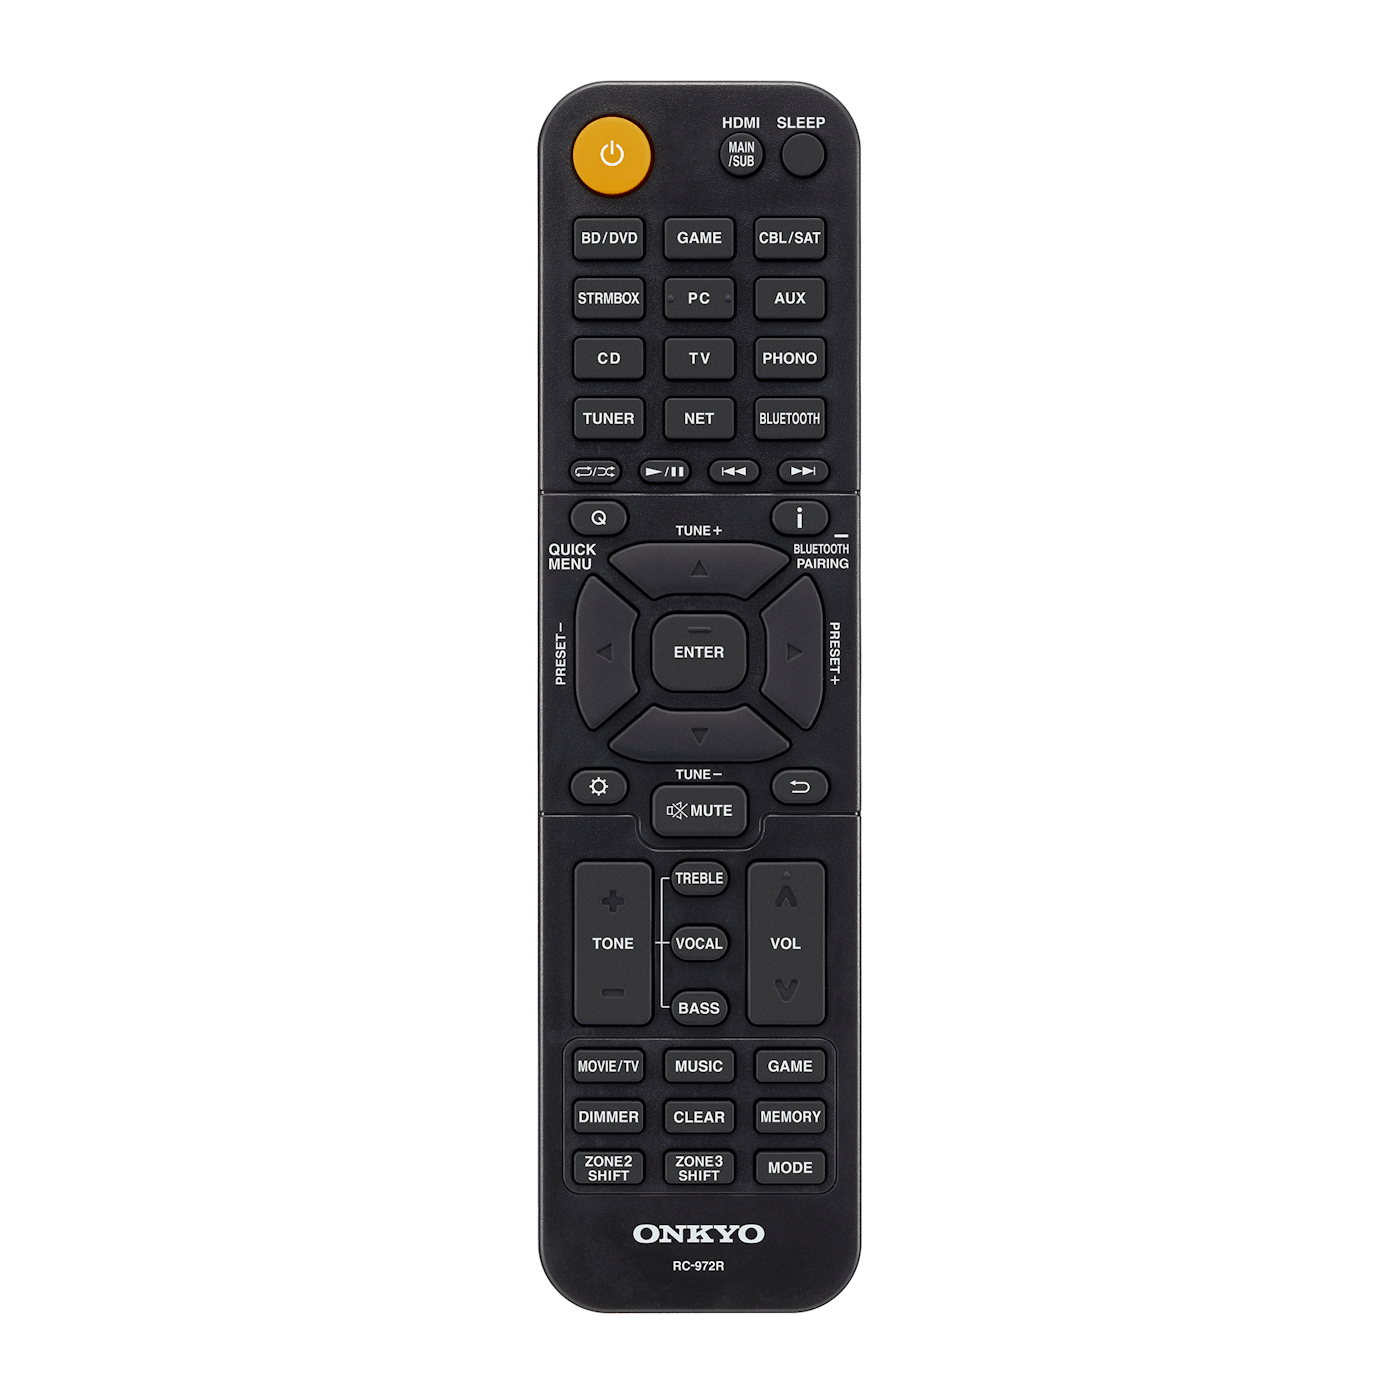 Onkyo Remote 972 R 2000x2000